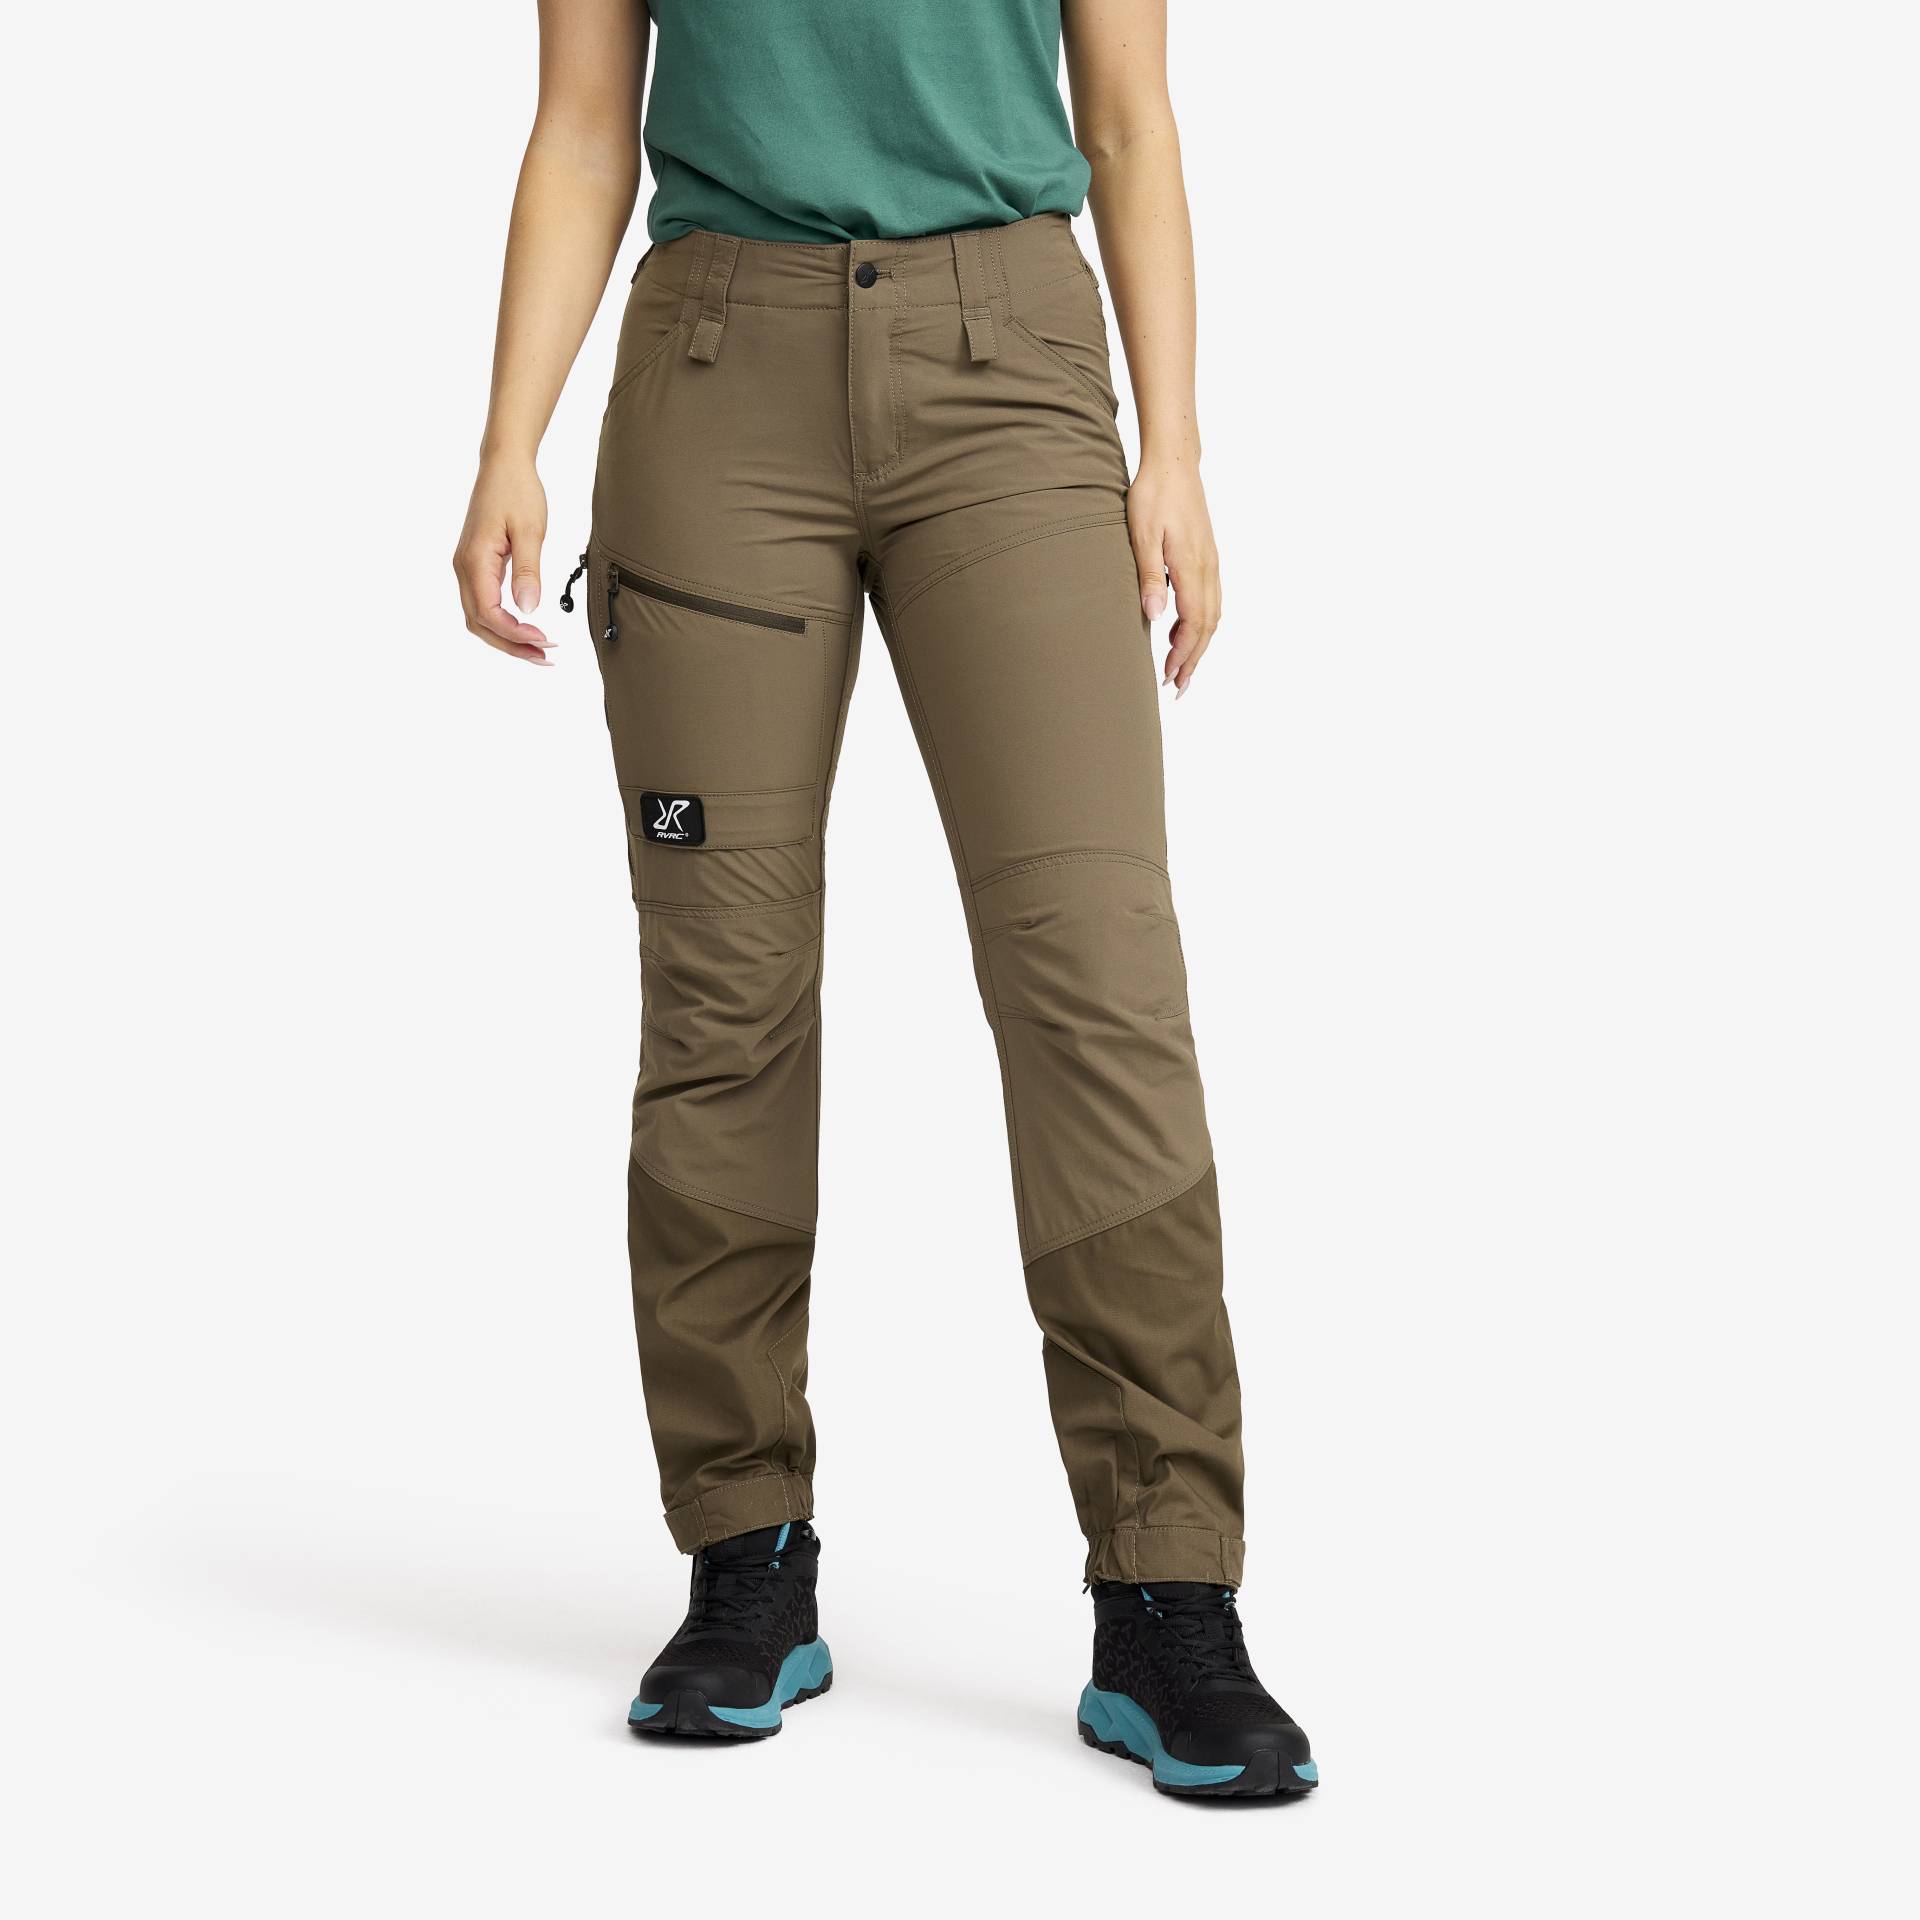 Range Pro Pants Damen Chocolate Chip, Größe:L - Outdoorhose, Wanderhose & Trekkinghose von RevolutionRace